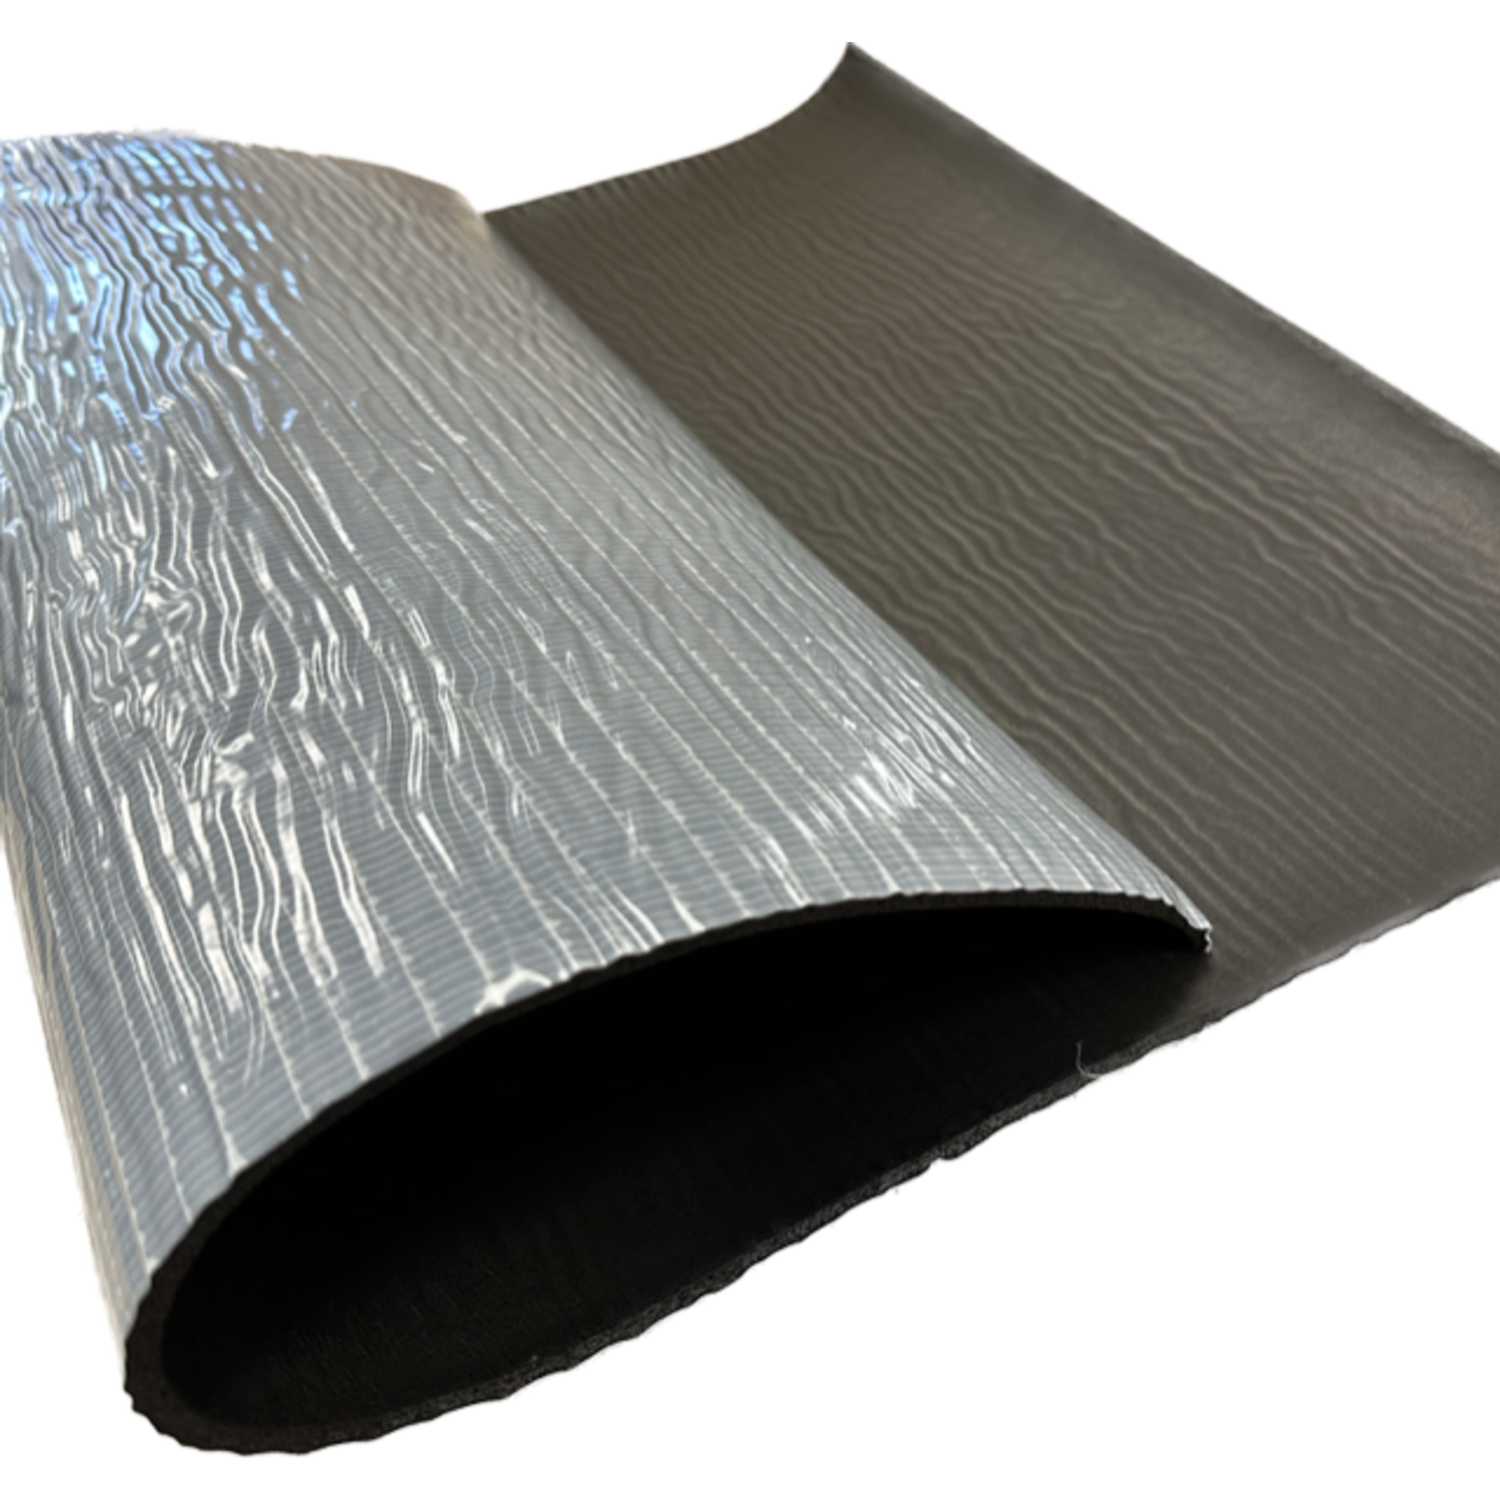 Hitzebeständige und schallabsorbierende Aluminiumplatte - Heat Shieldings